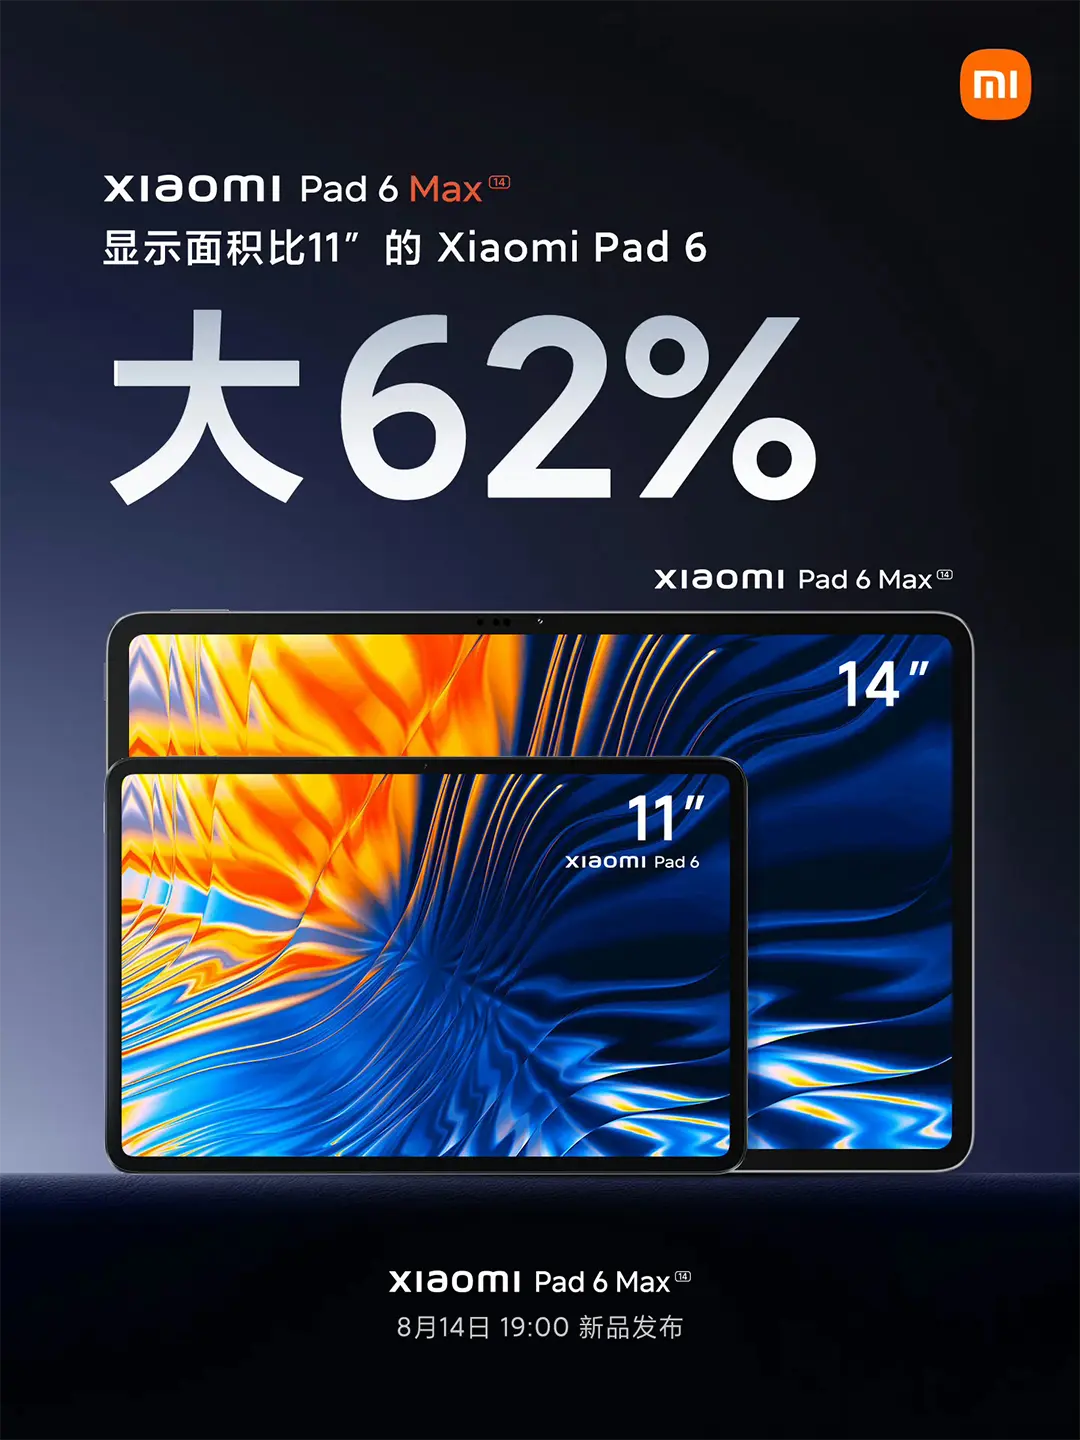 Xiaomi Pad 6 MAX is bemutatkozik augusztus 14-én!